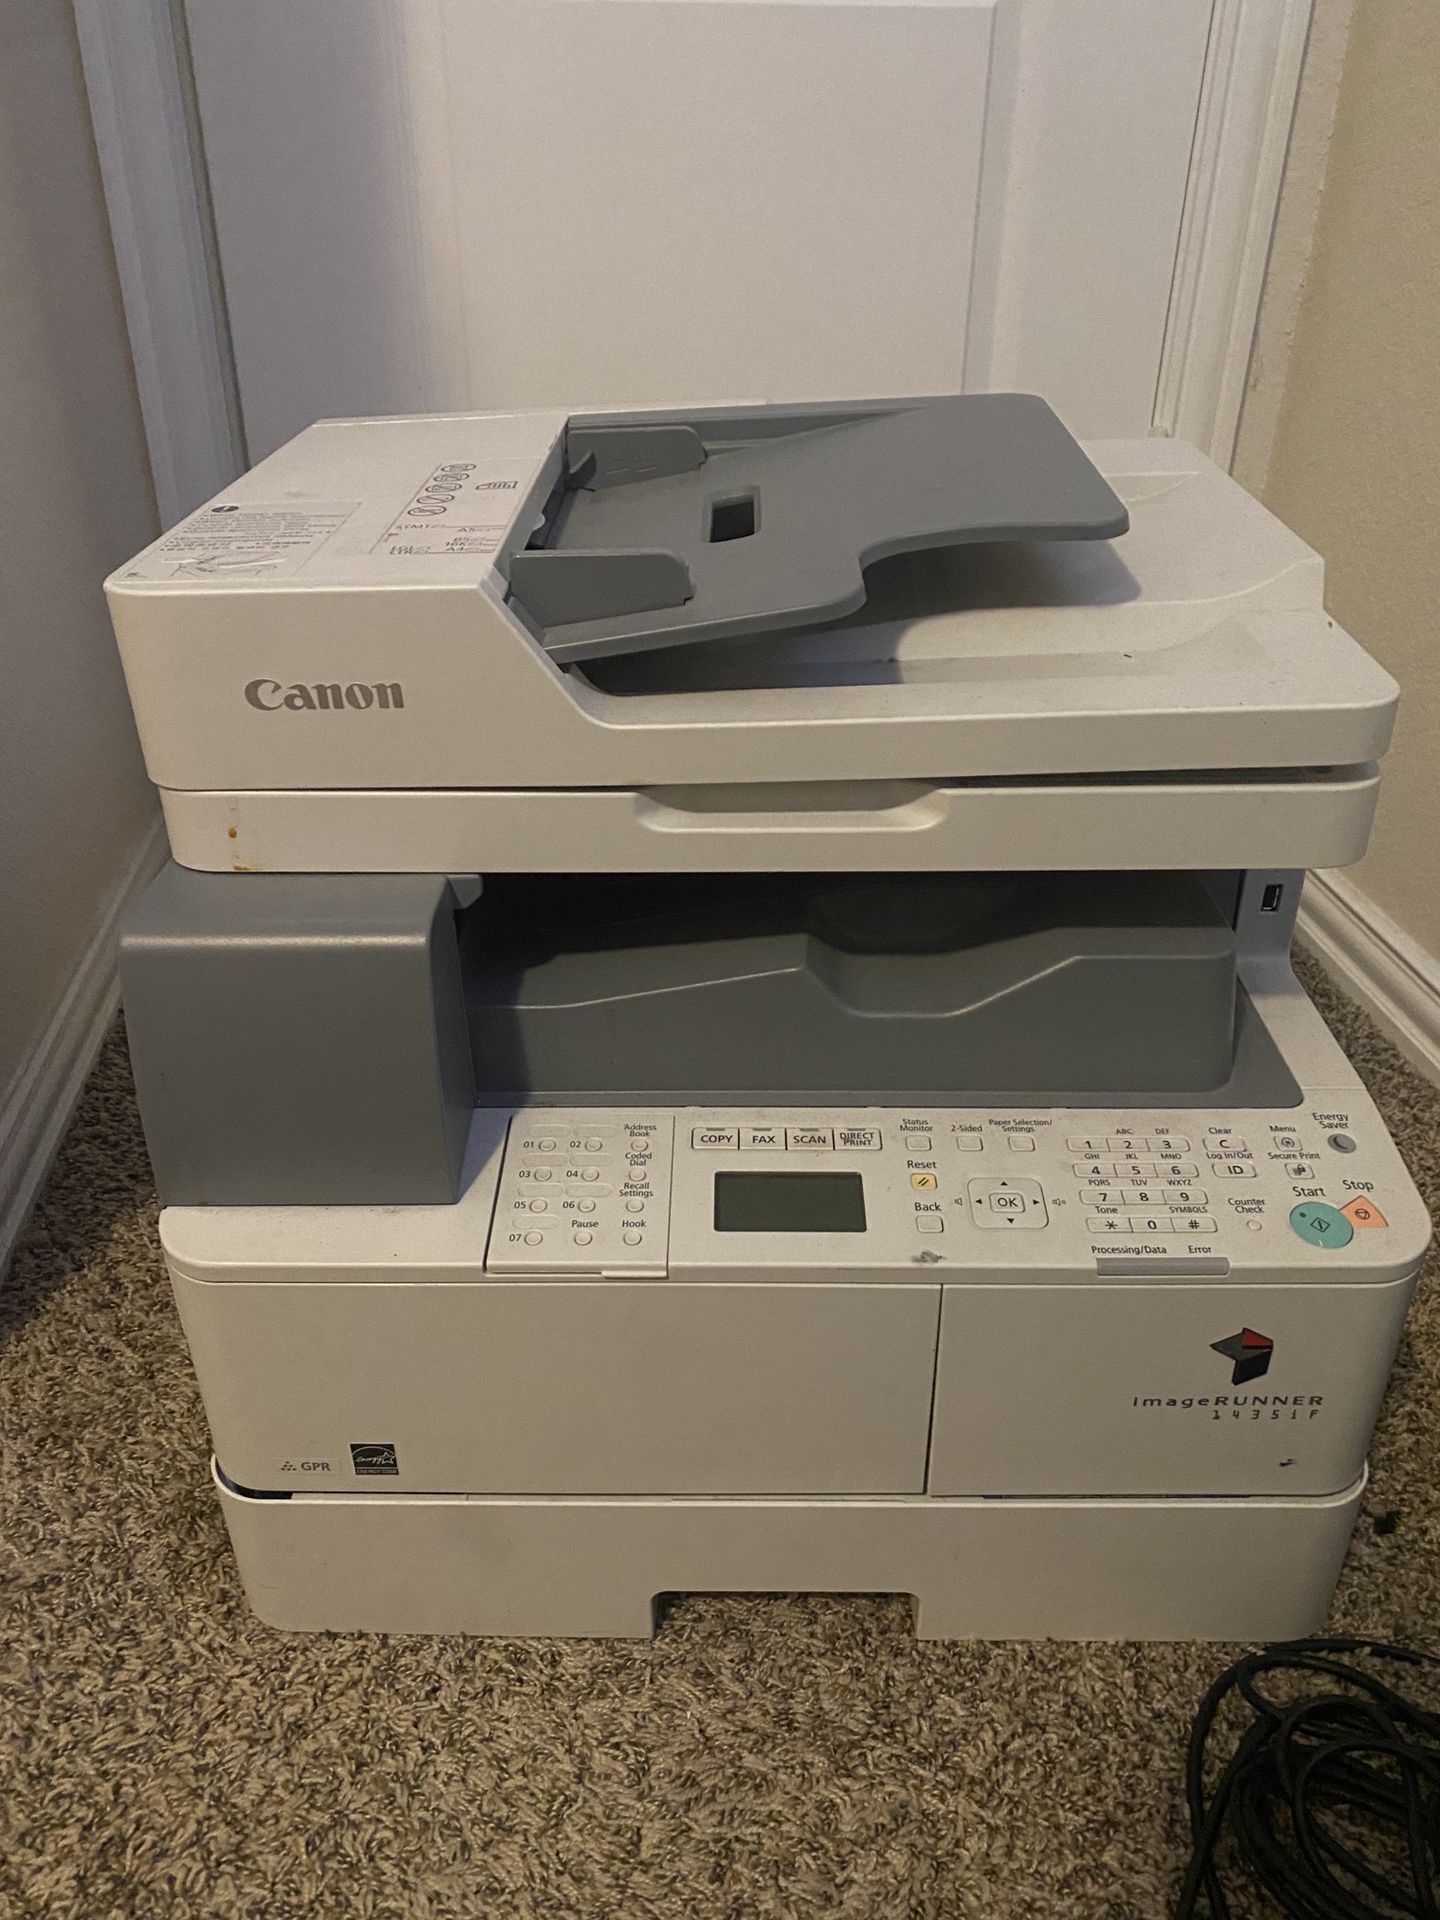 Canon Imagerunner 1435if Office Printer